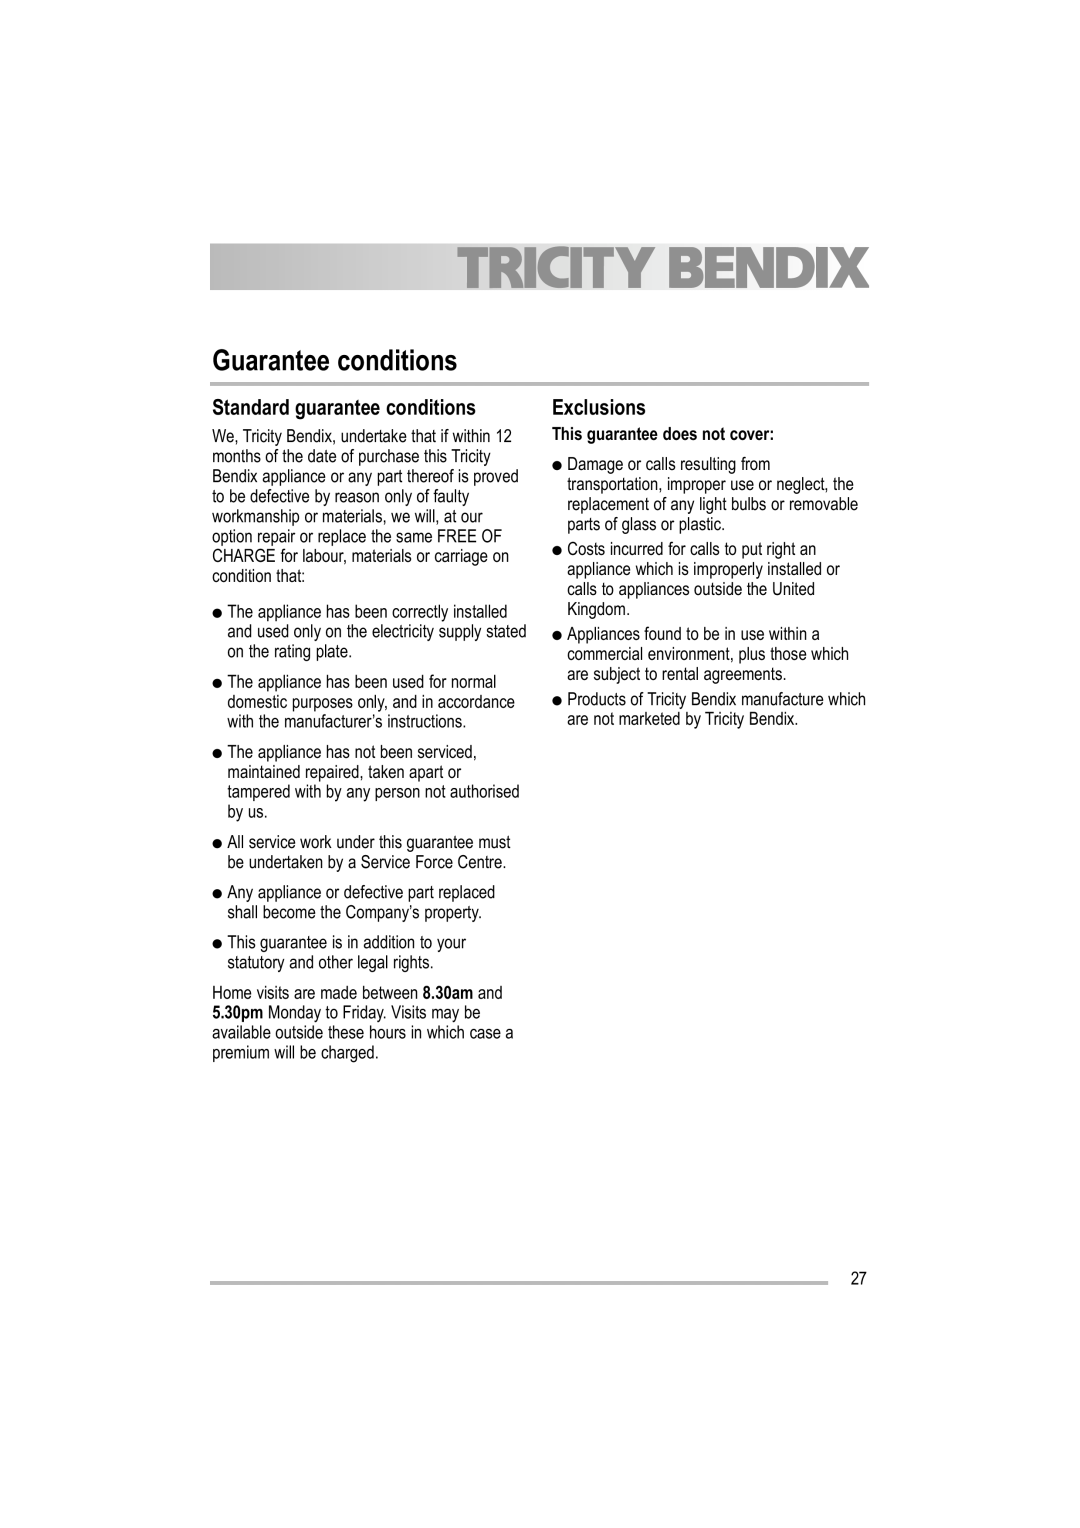 Tricity Bendix TBDW 32 manual Guarantee conditions, Standard guarantee conditions, Exclusions 